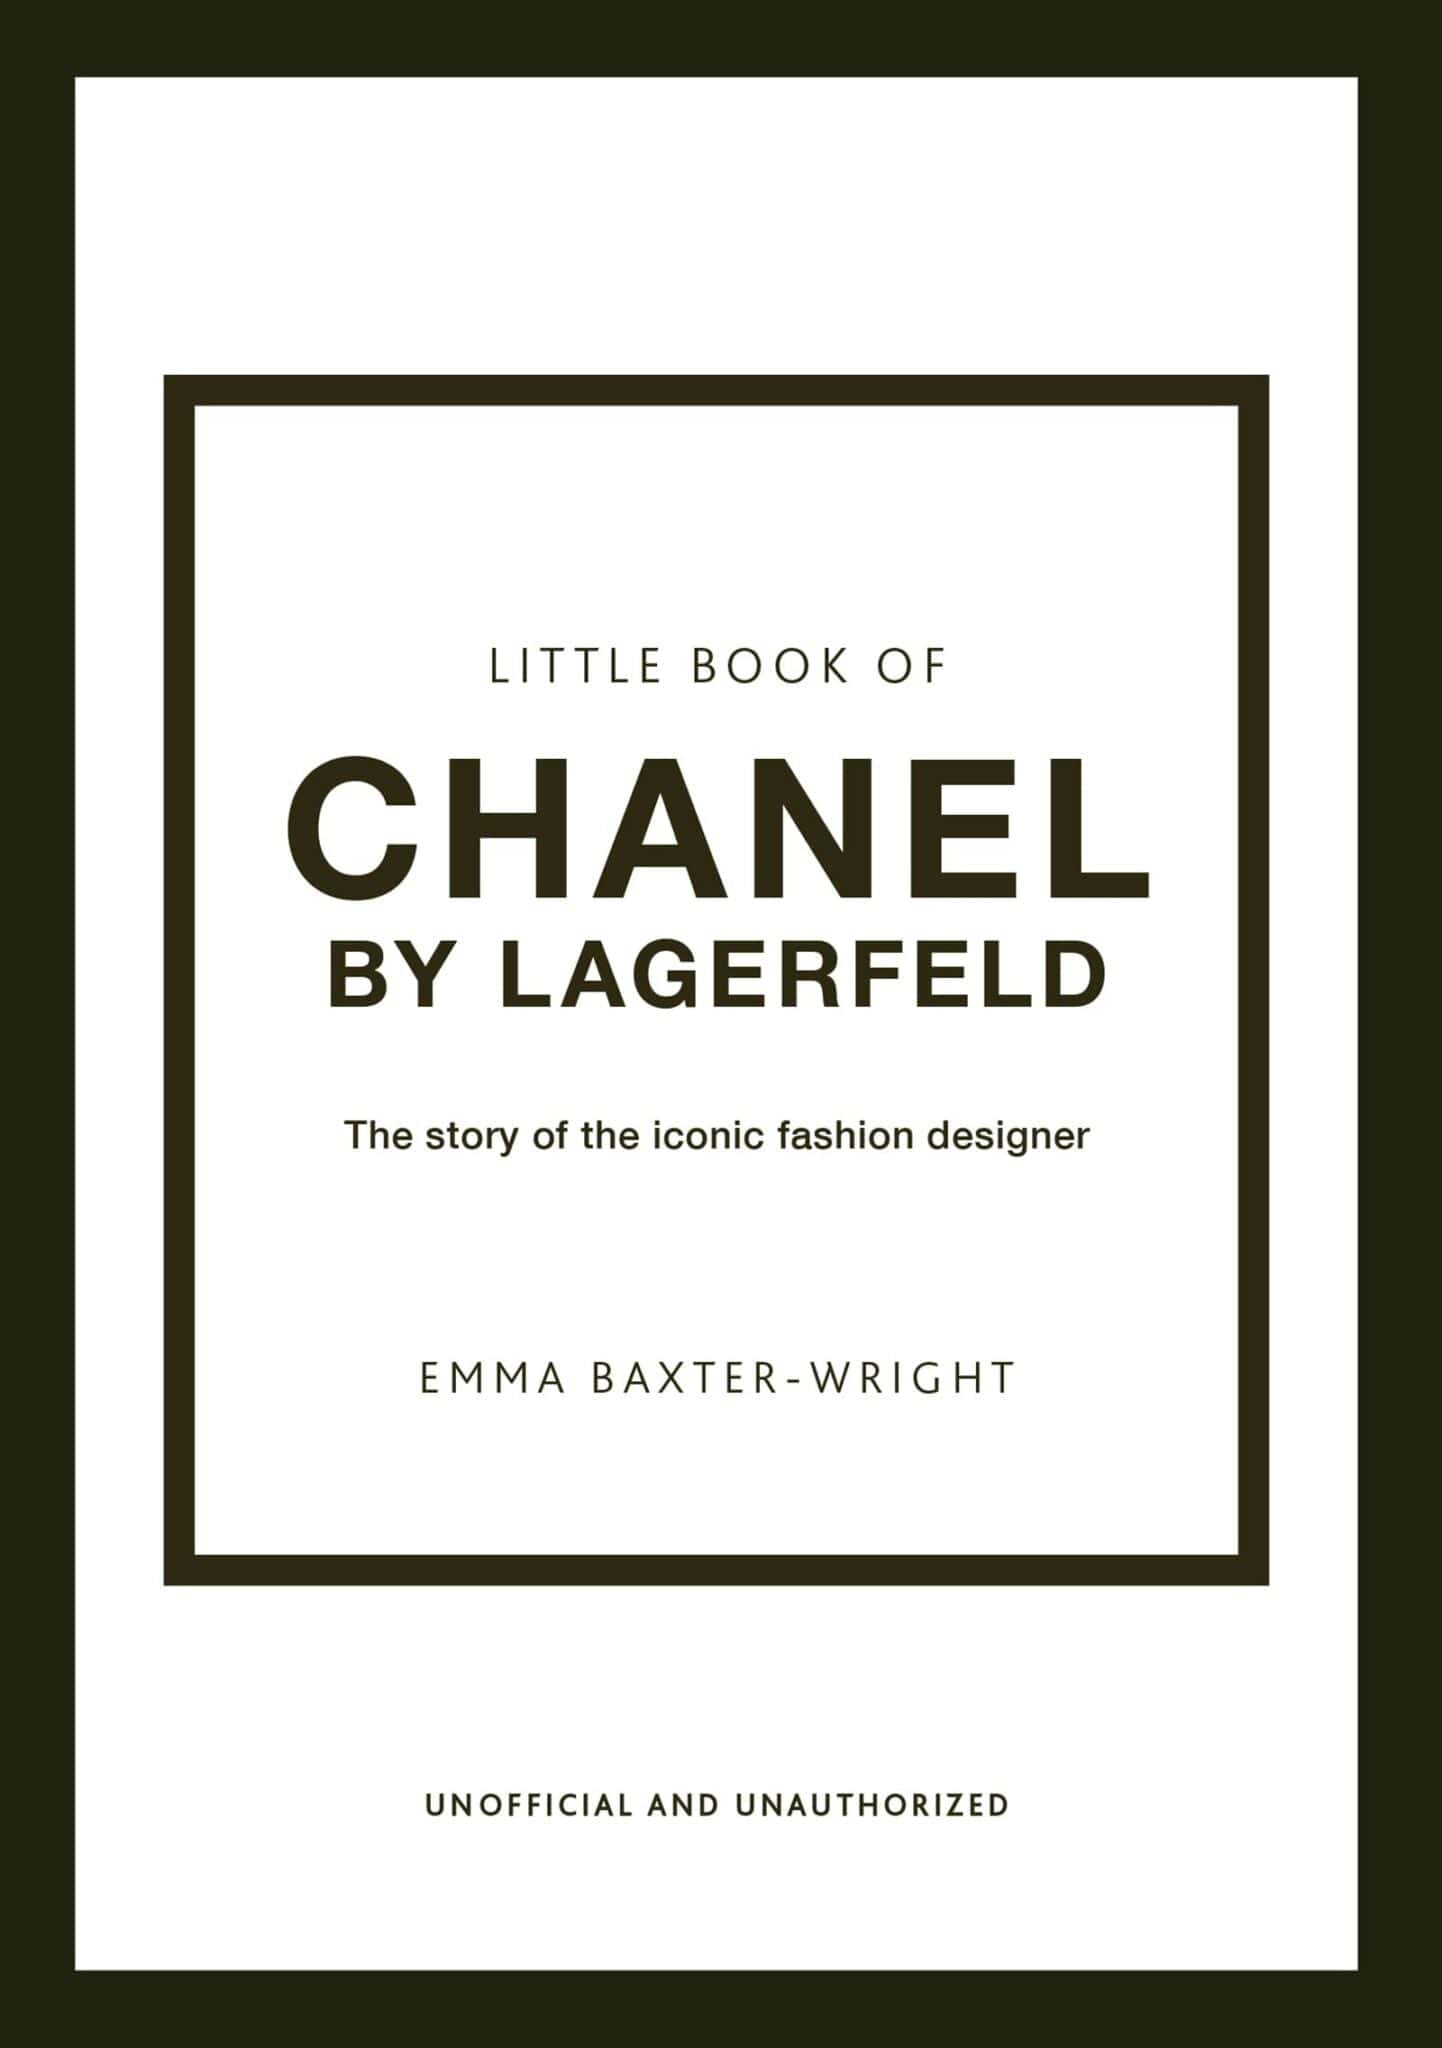 Hintsdeco Books Βιβλίο Τέχνης Βιβλίο Τέχνης, Fashion, Little Book of Channel by Lagerfeld, Μαύρο-Άσπρο, 13×1,8×18,5 cm, Hintsdeco